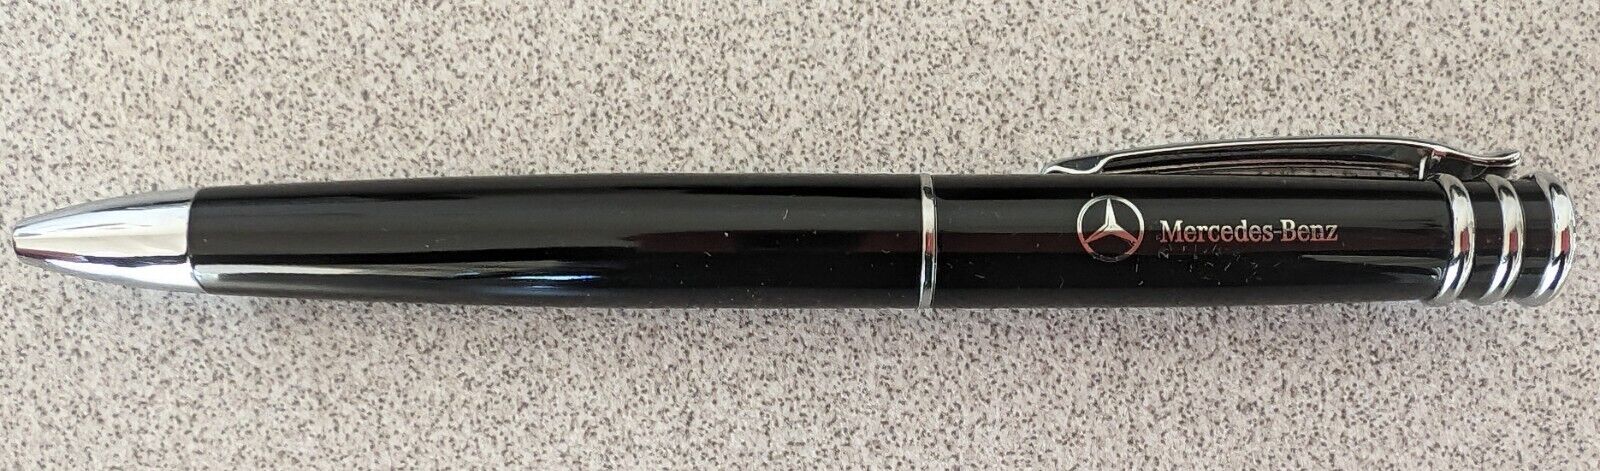 Mercedes-Benz Genuine OEM BLACK Ballpoint Pen - NEW